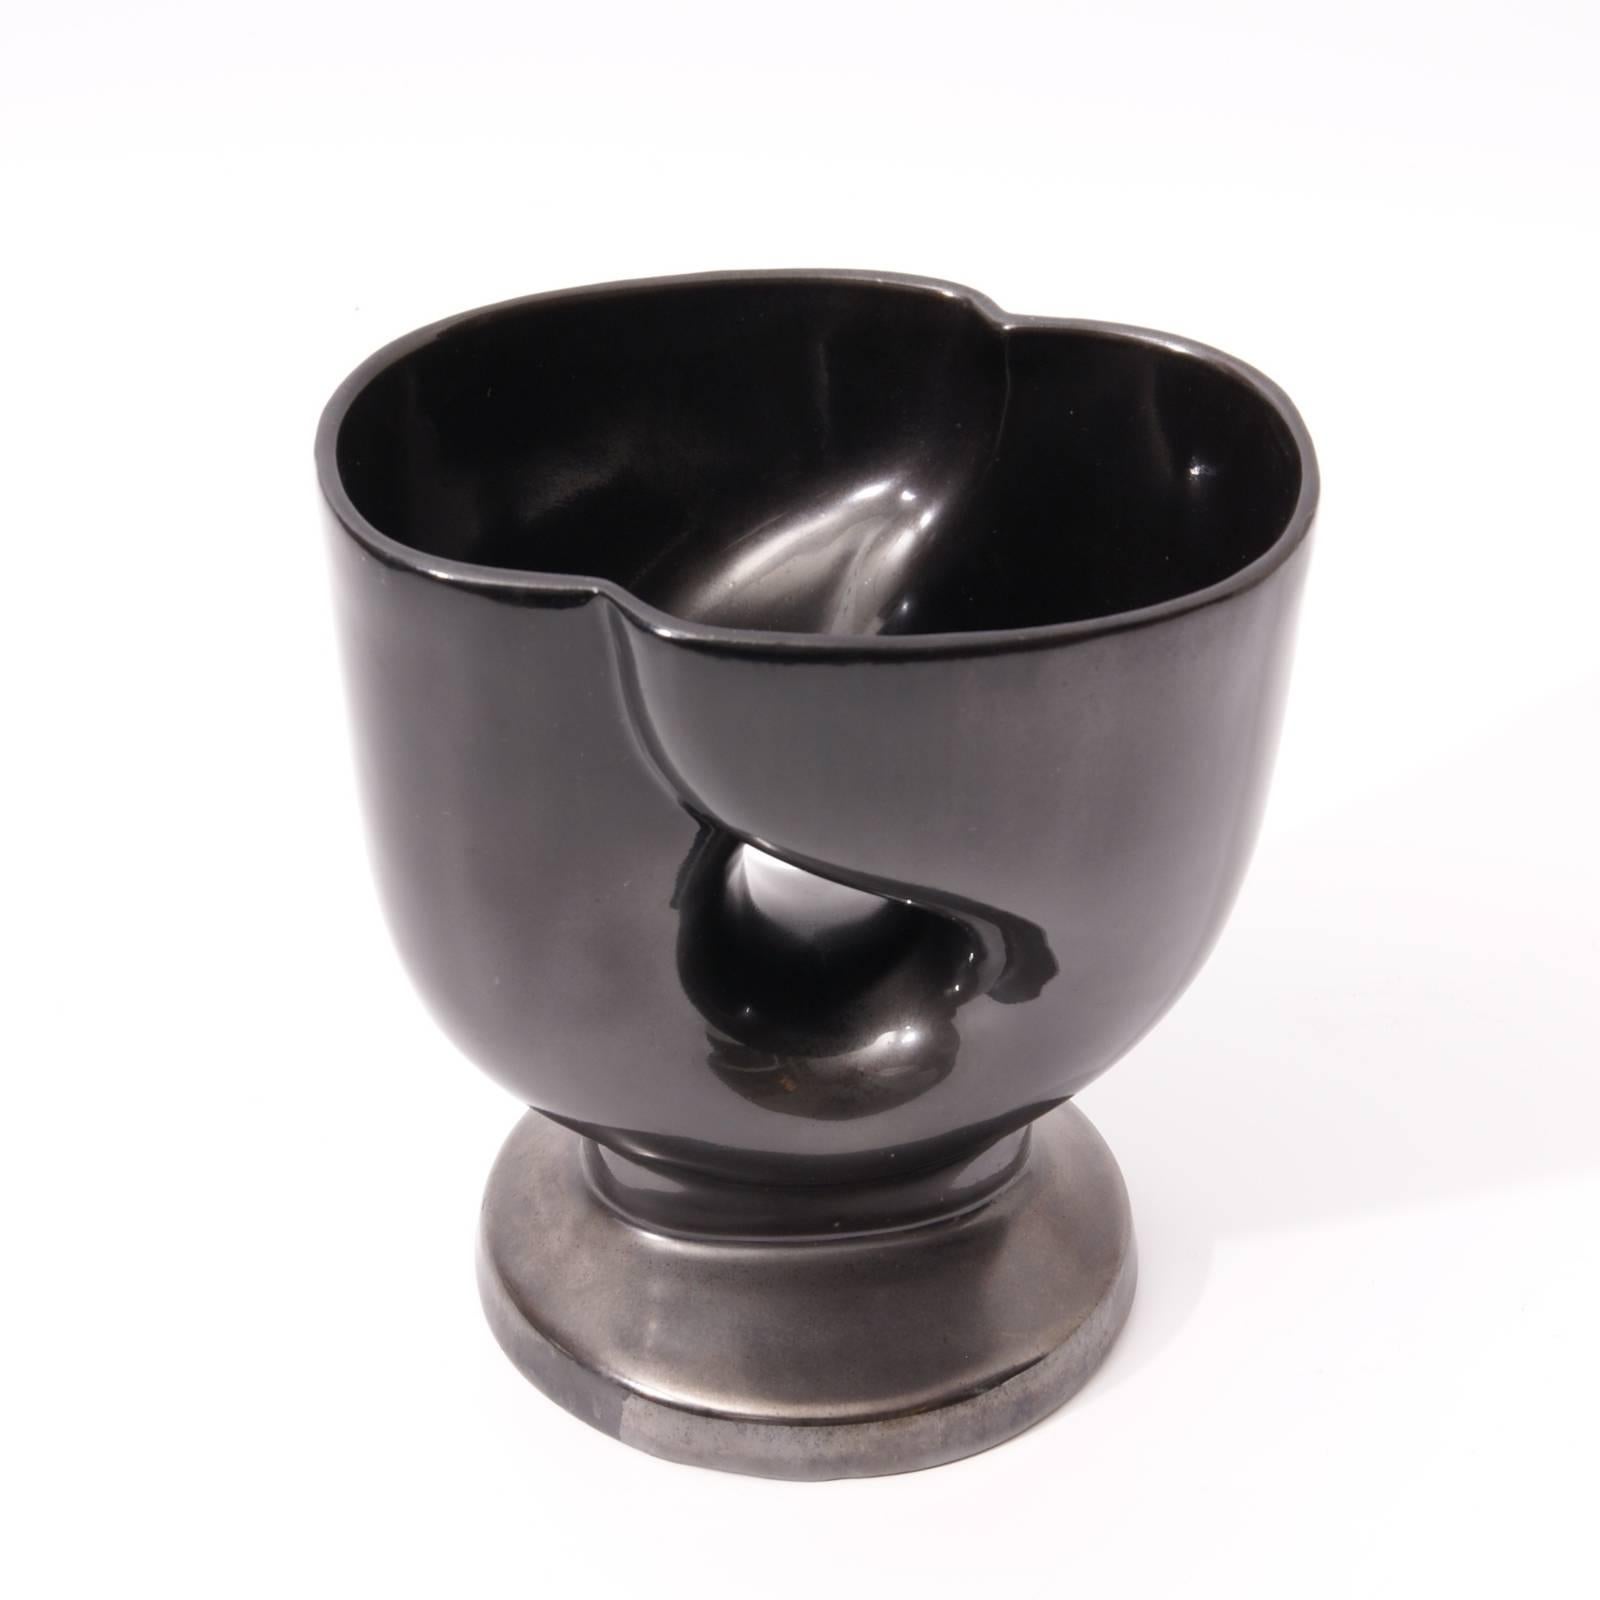 This earthenware vase entitled 